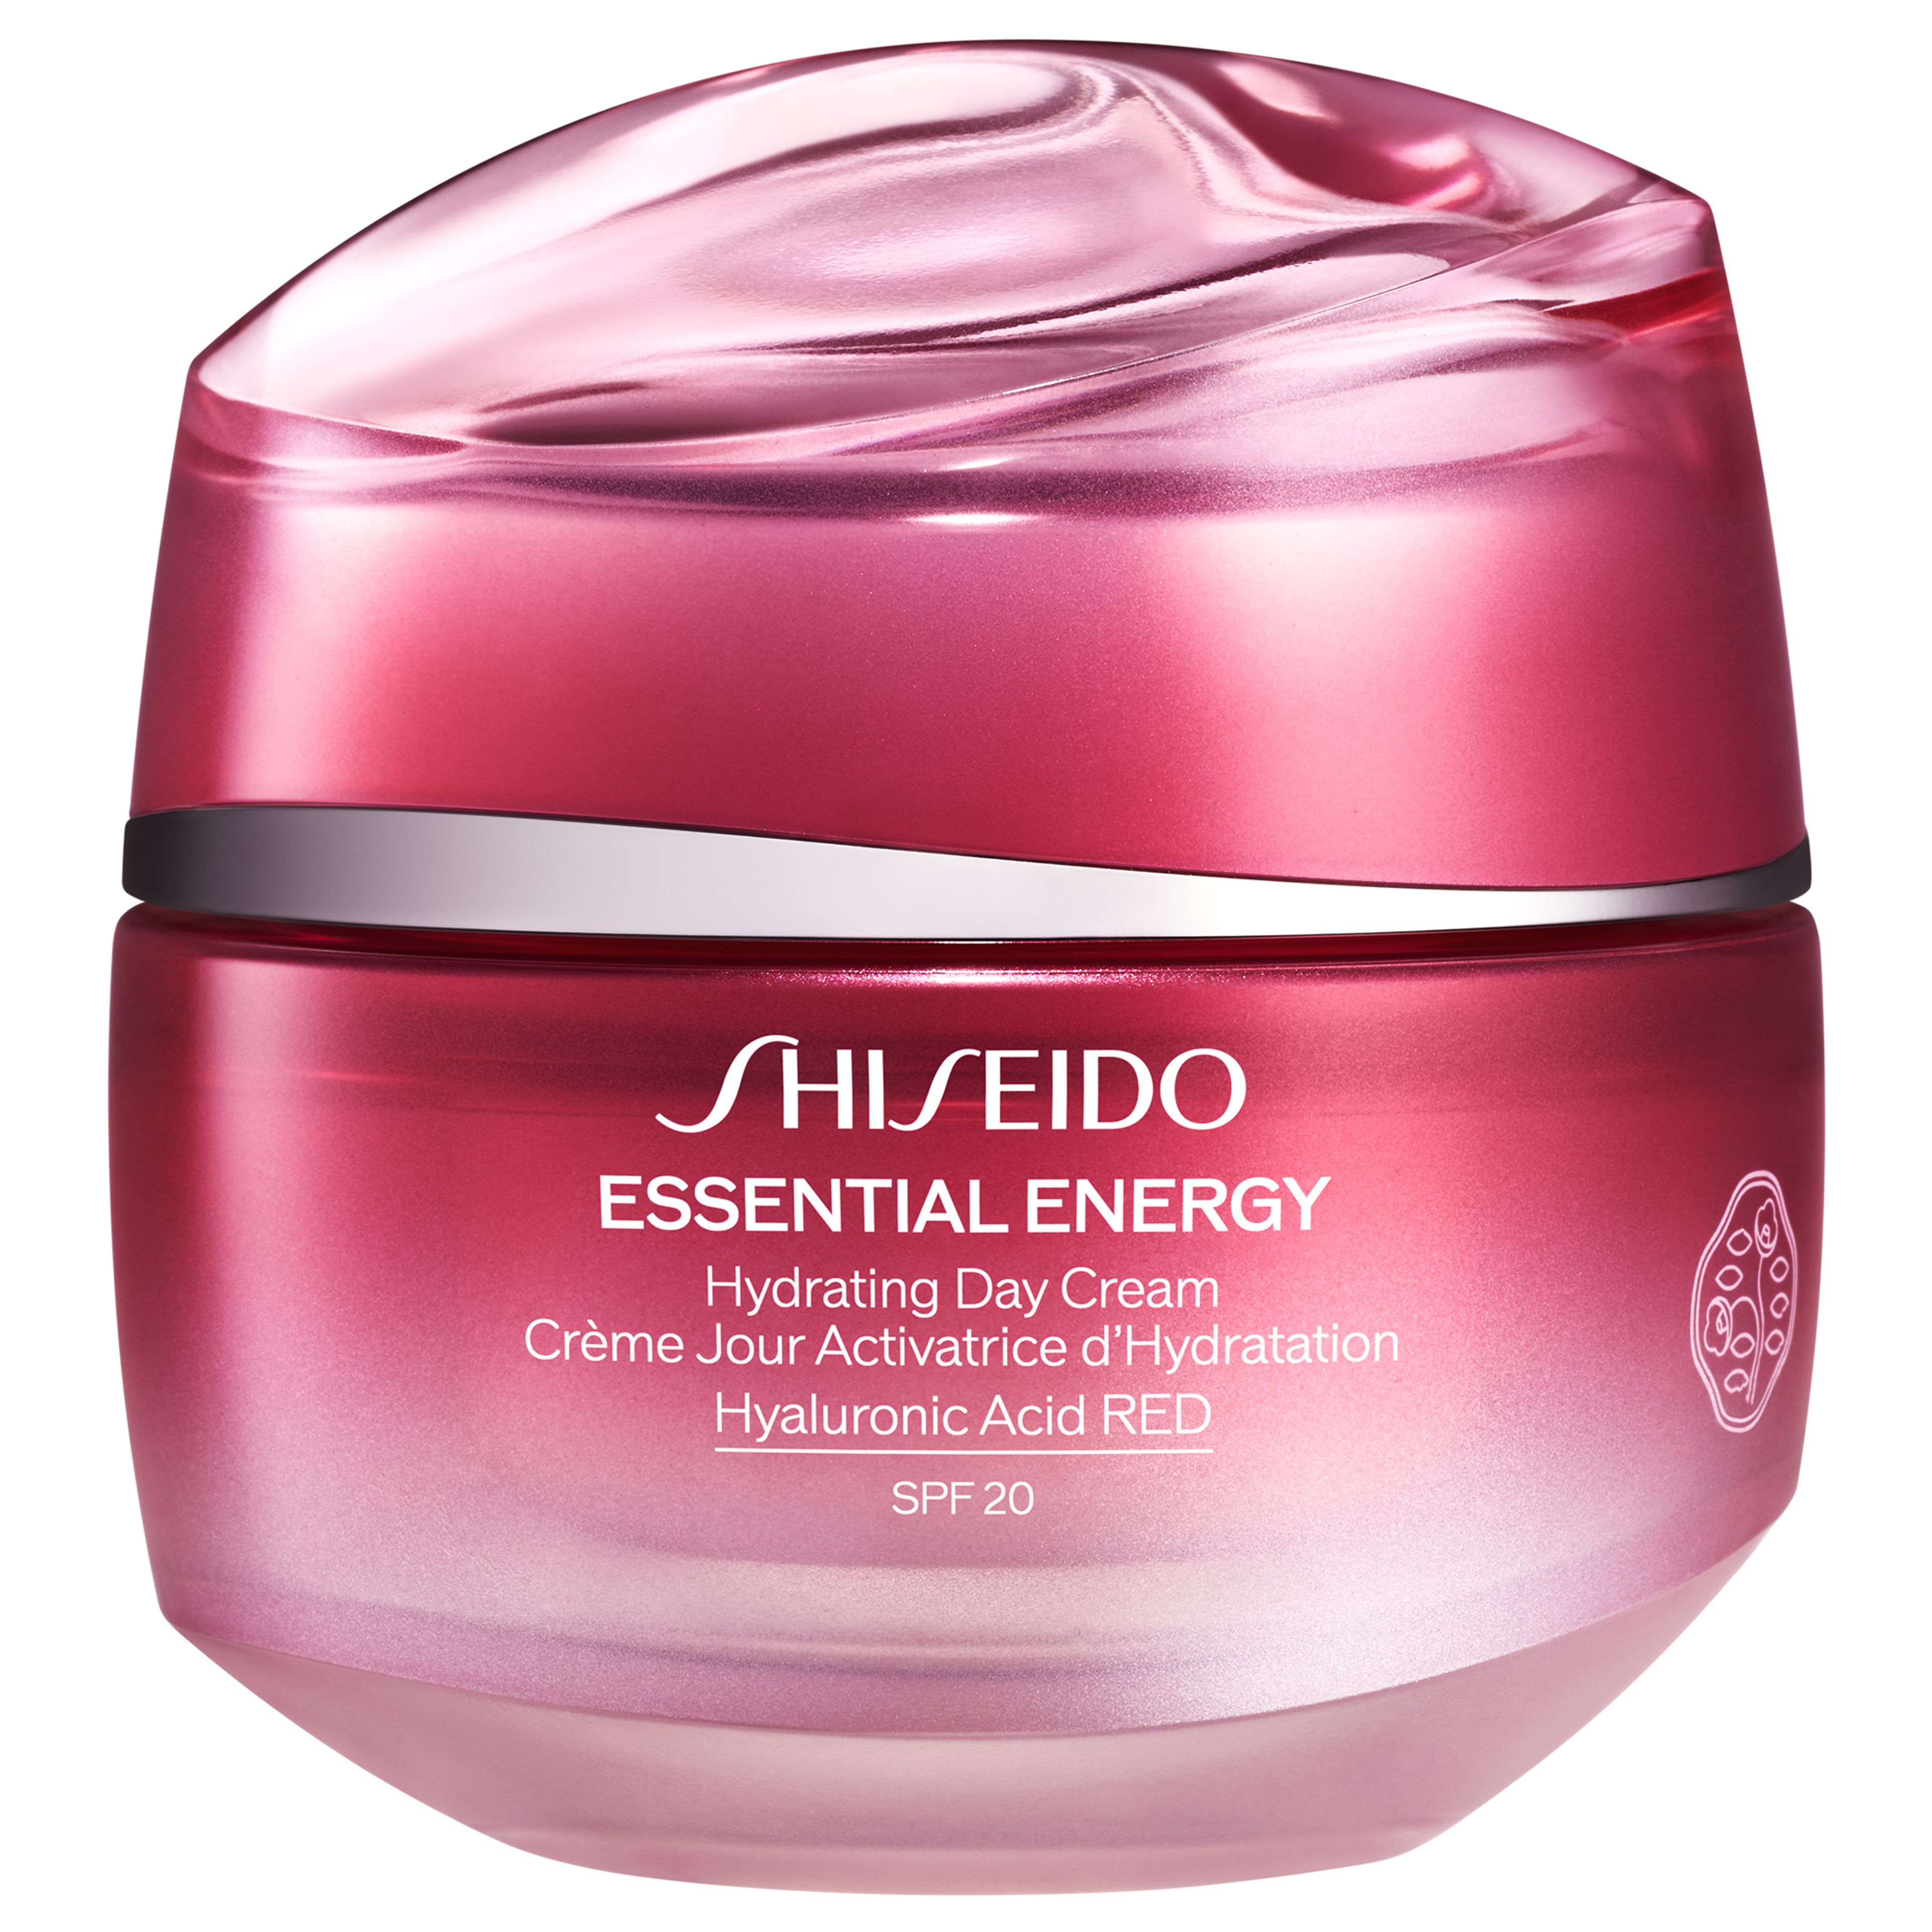 Shiseido Hydrating Day Cream 1